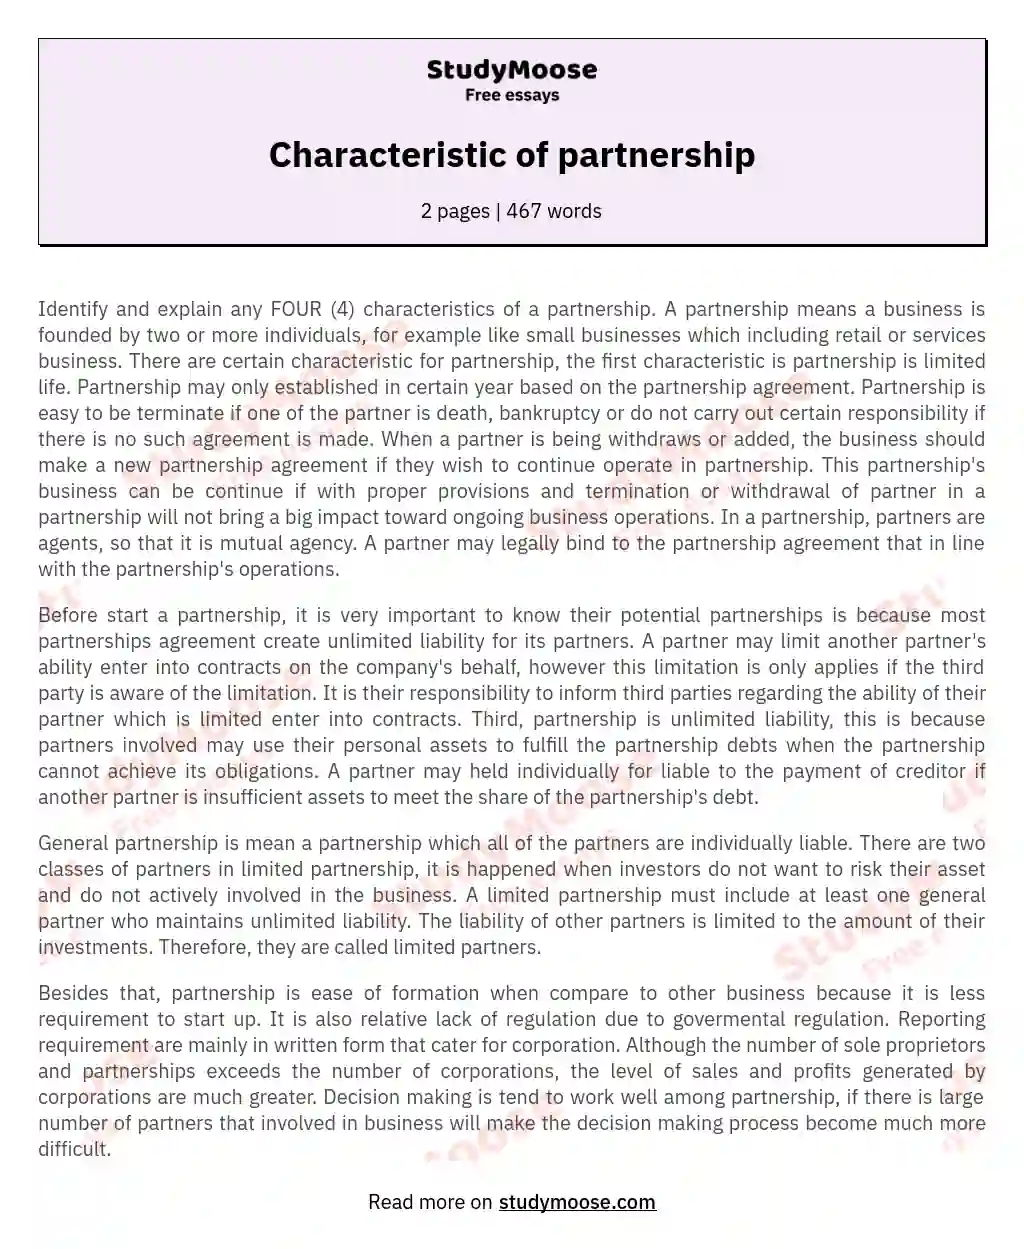 Characteristic of partnership essay